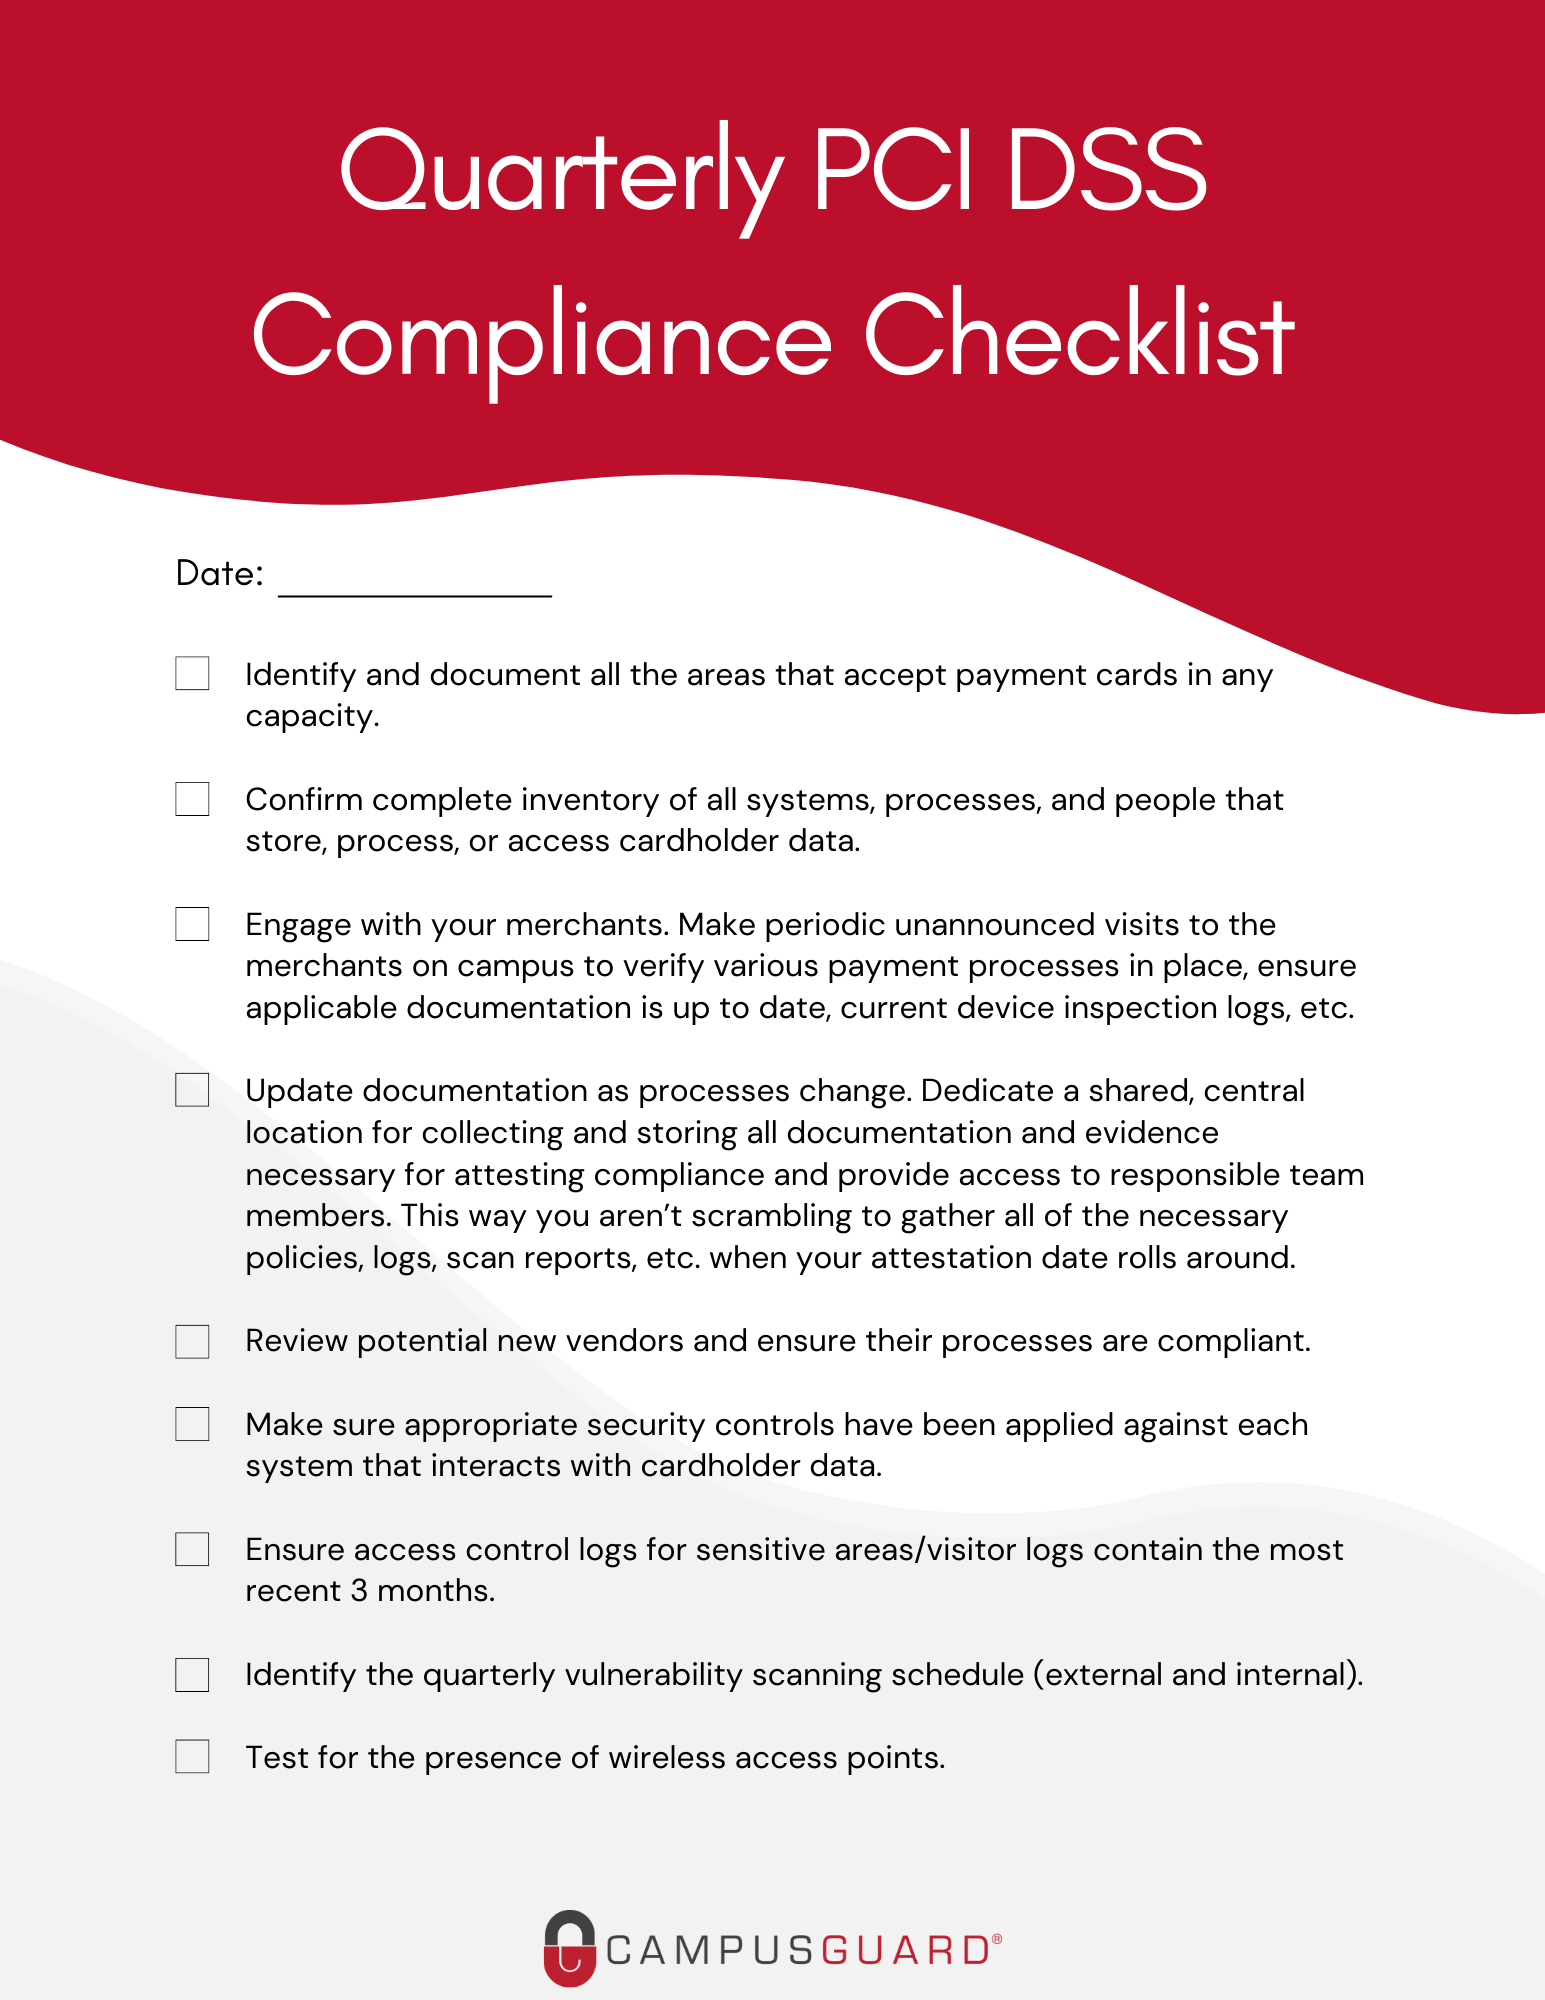 PCI DSS Compliance Quarterly Checklist